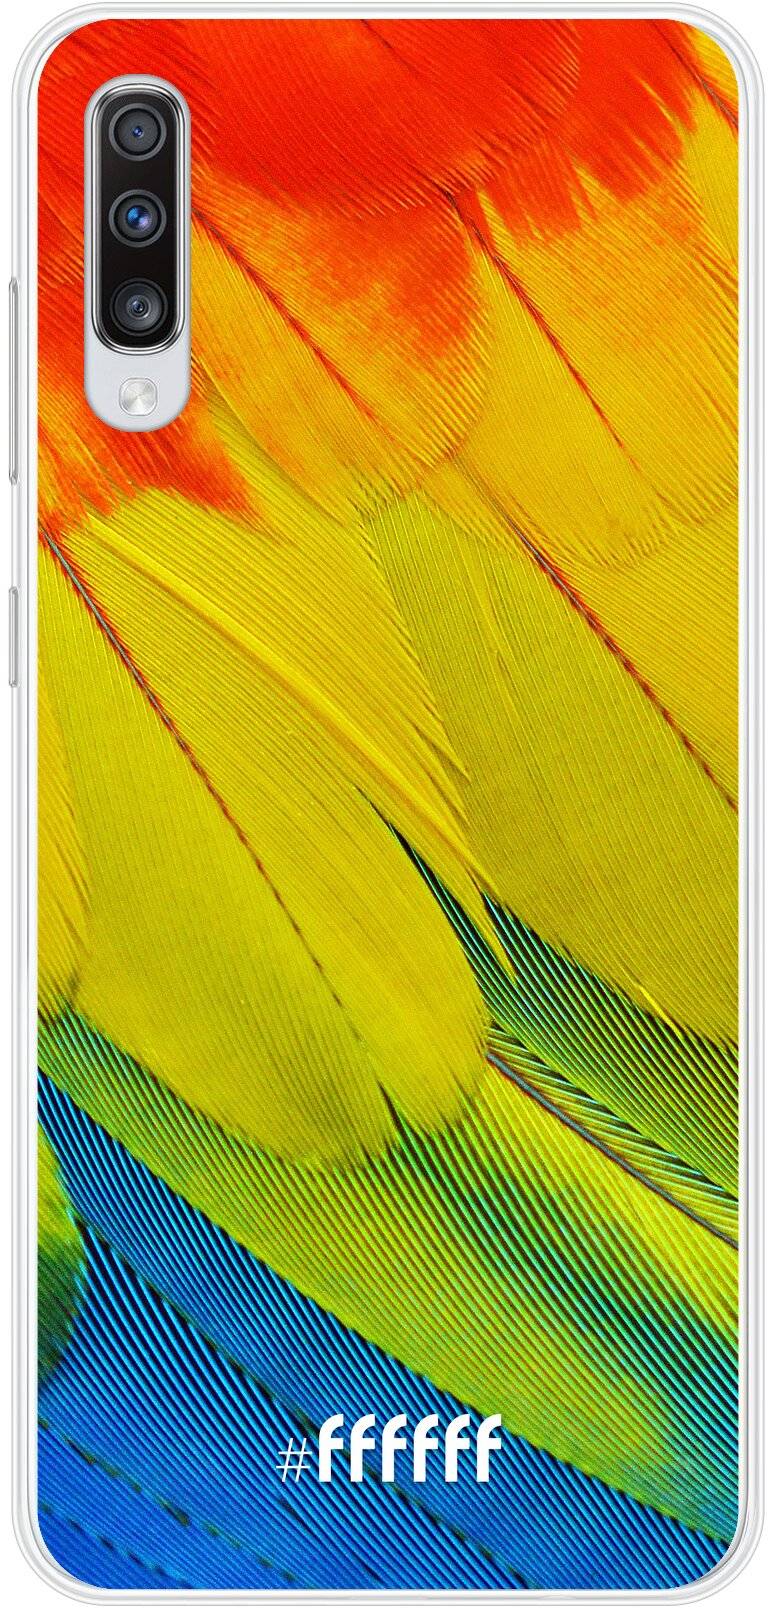 Macaw Hues Galaxy A70